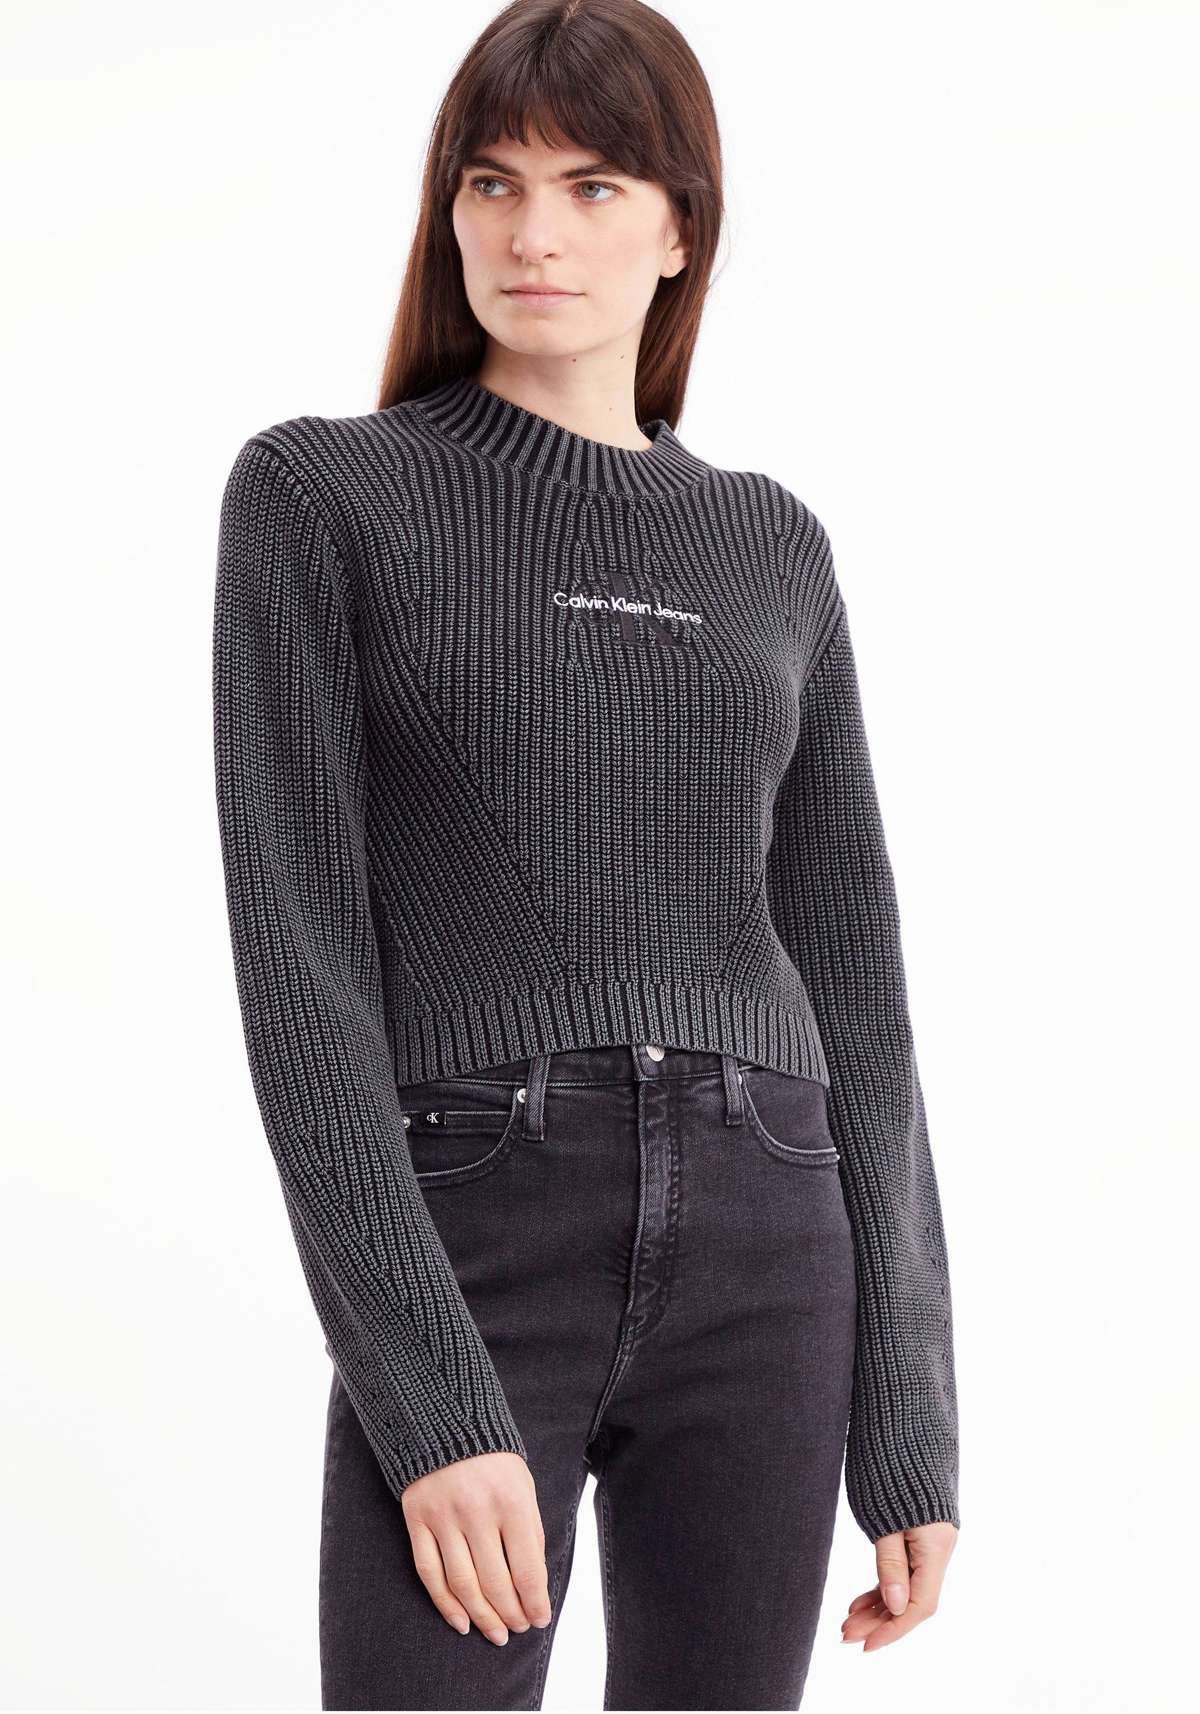 Вязаный свитер WASHED MONOLOGO SWEATER с вышивкой логотипа на груди спереди